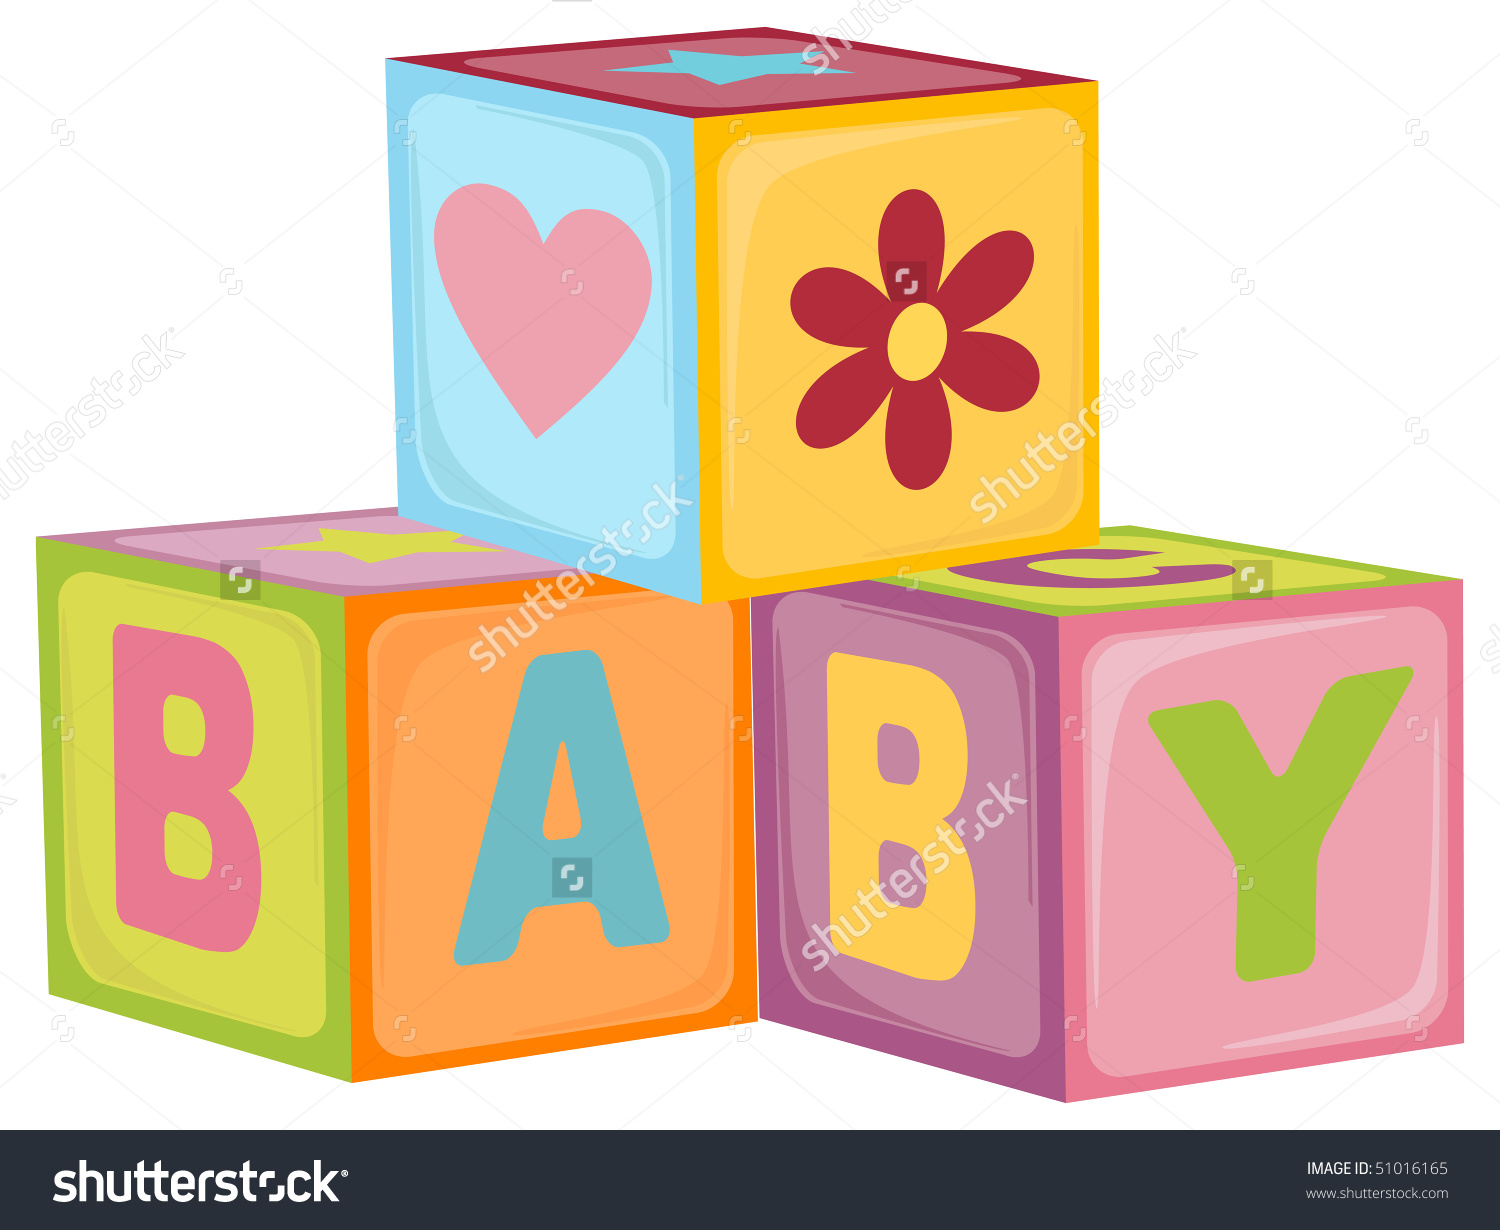 building blocks clipart baby